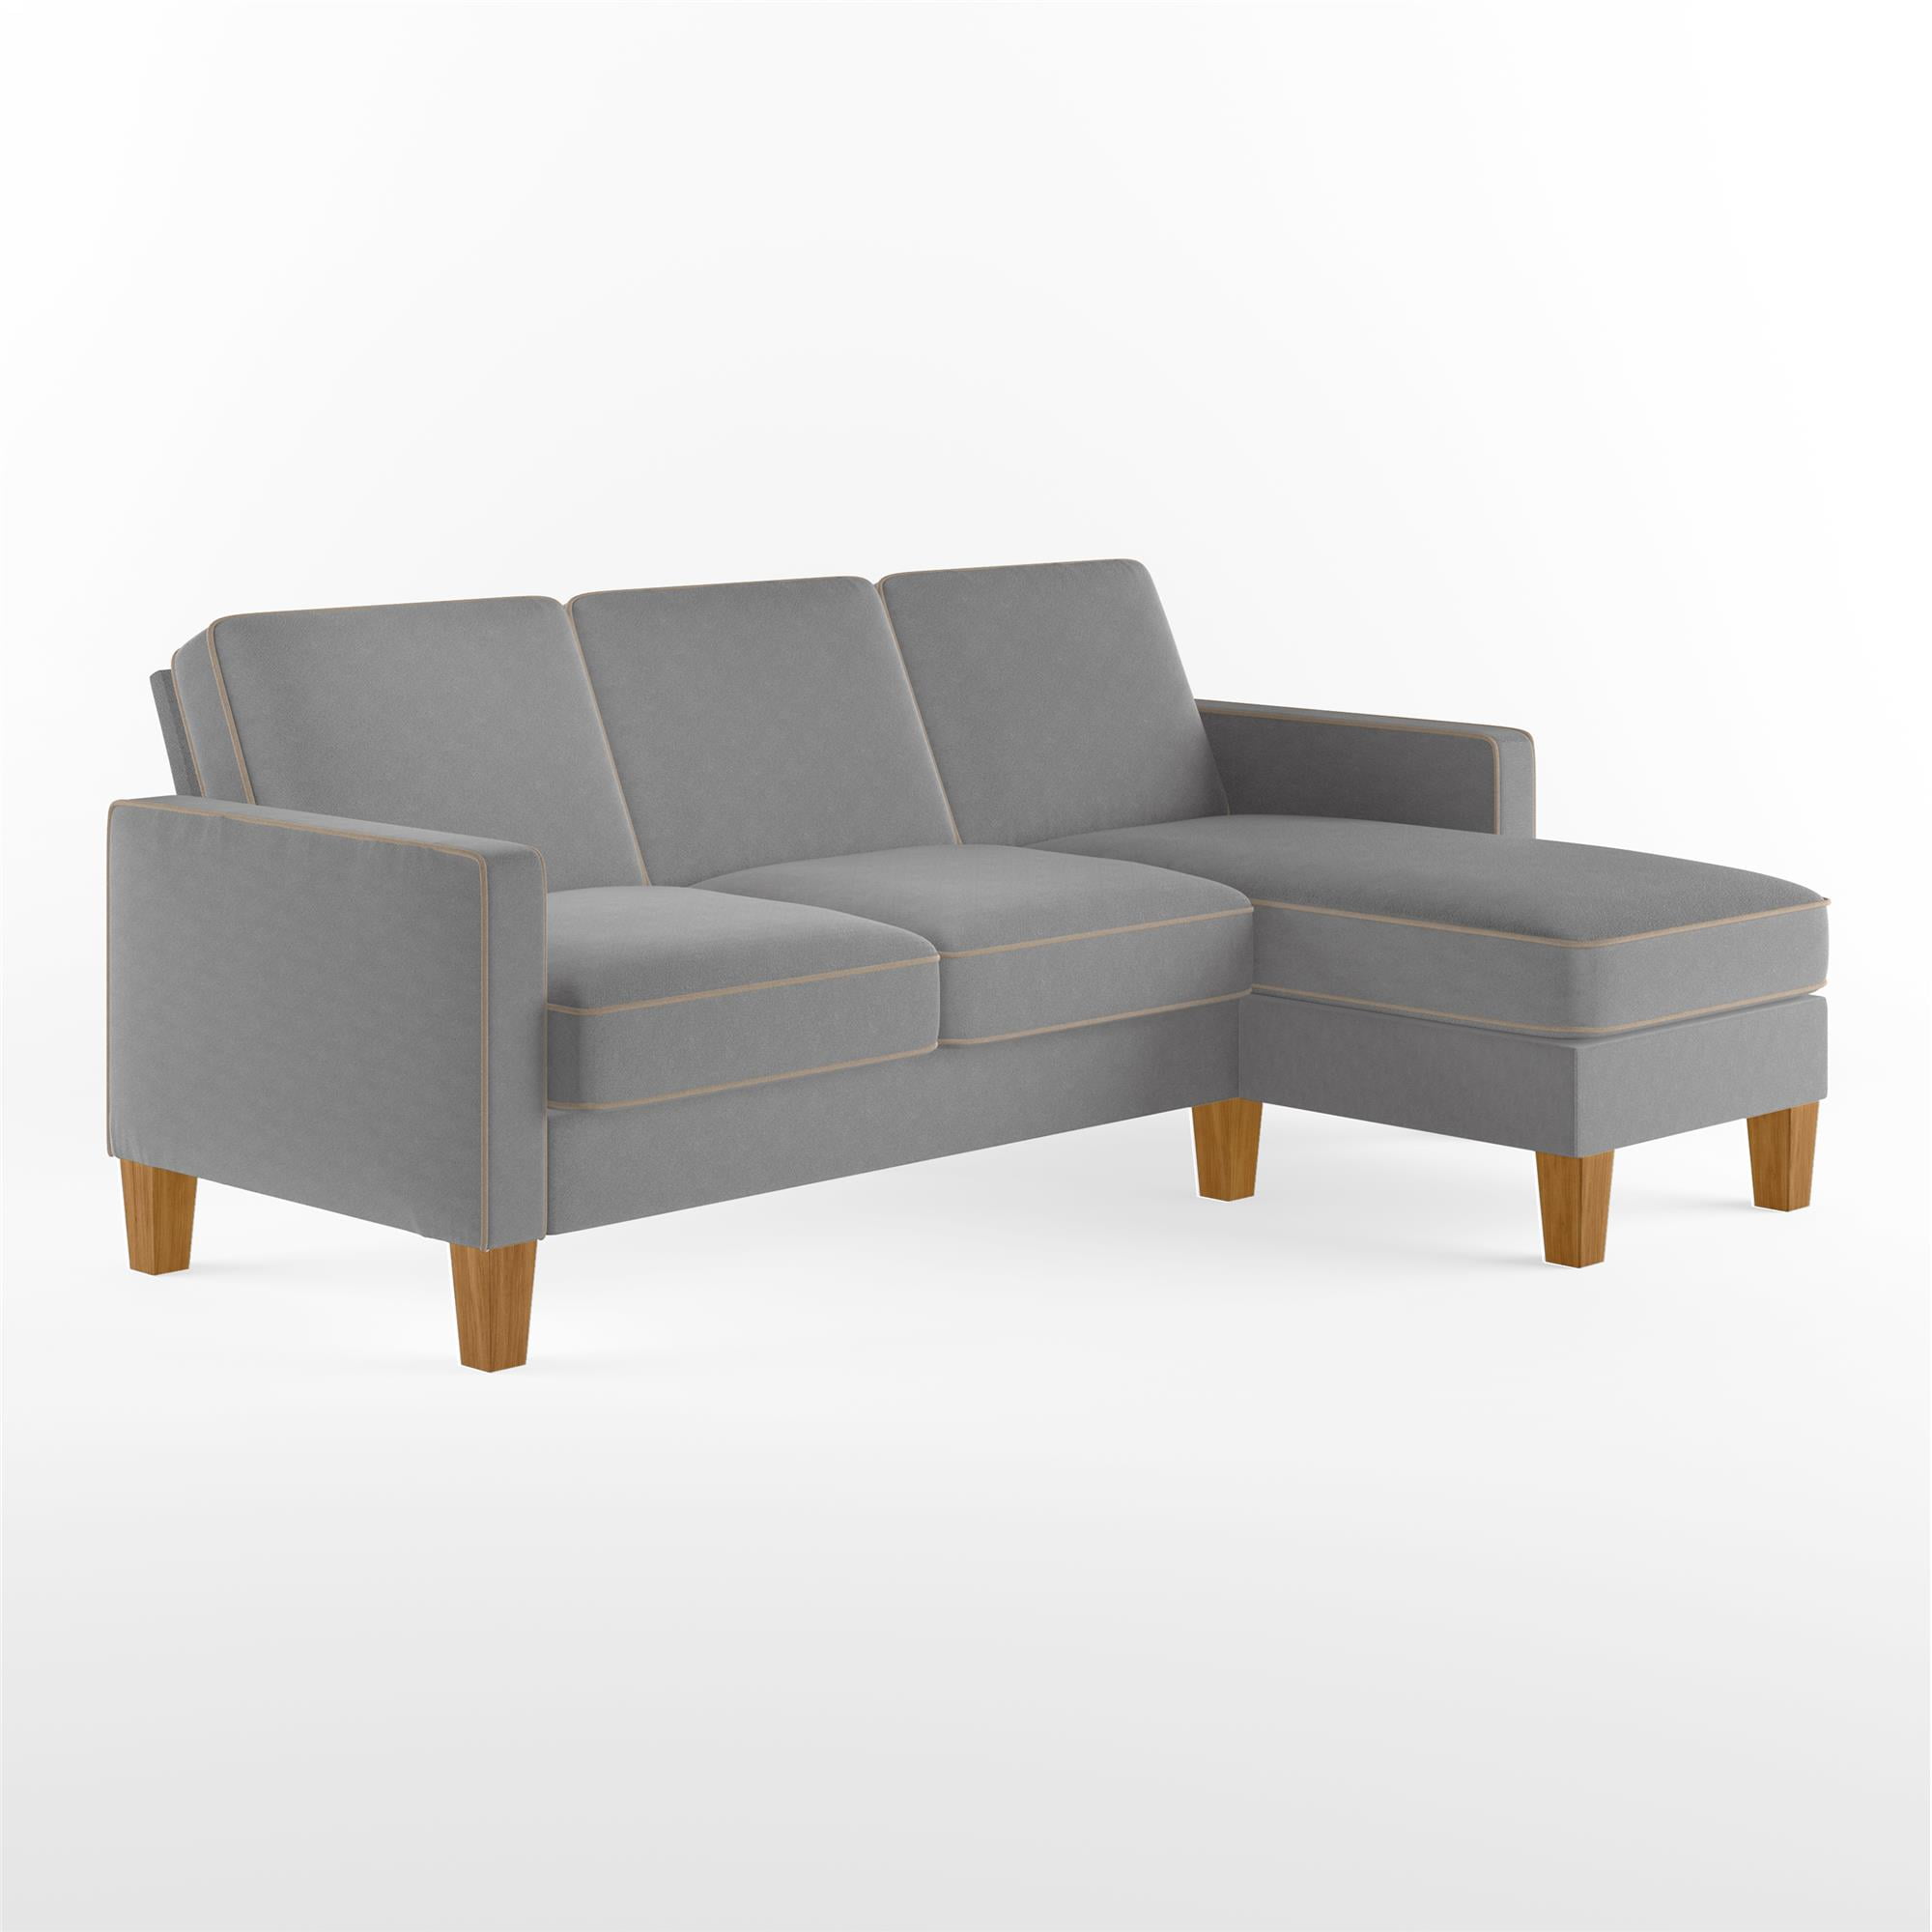 Novogratz Bowen Sectional Sofa with Contrast Welting, Gray